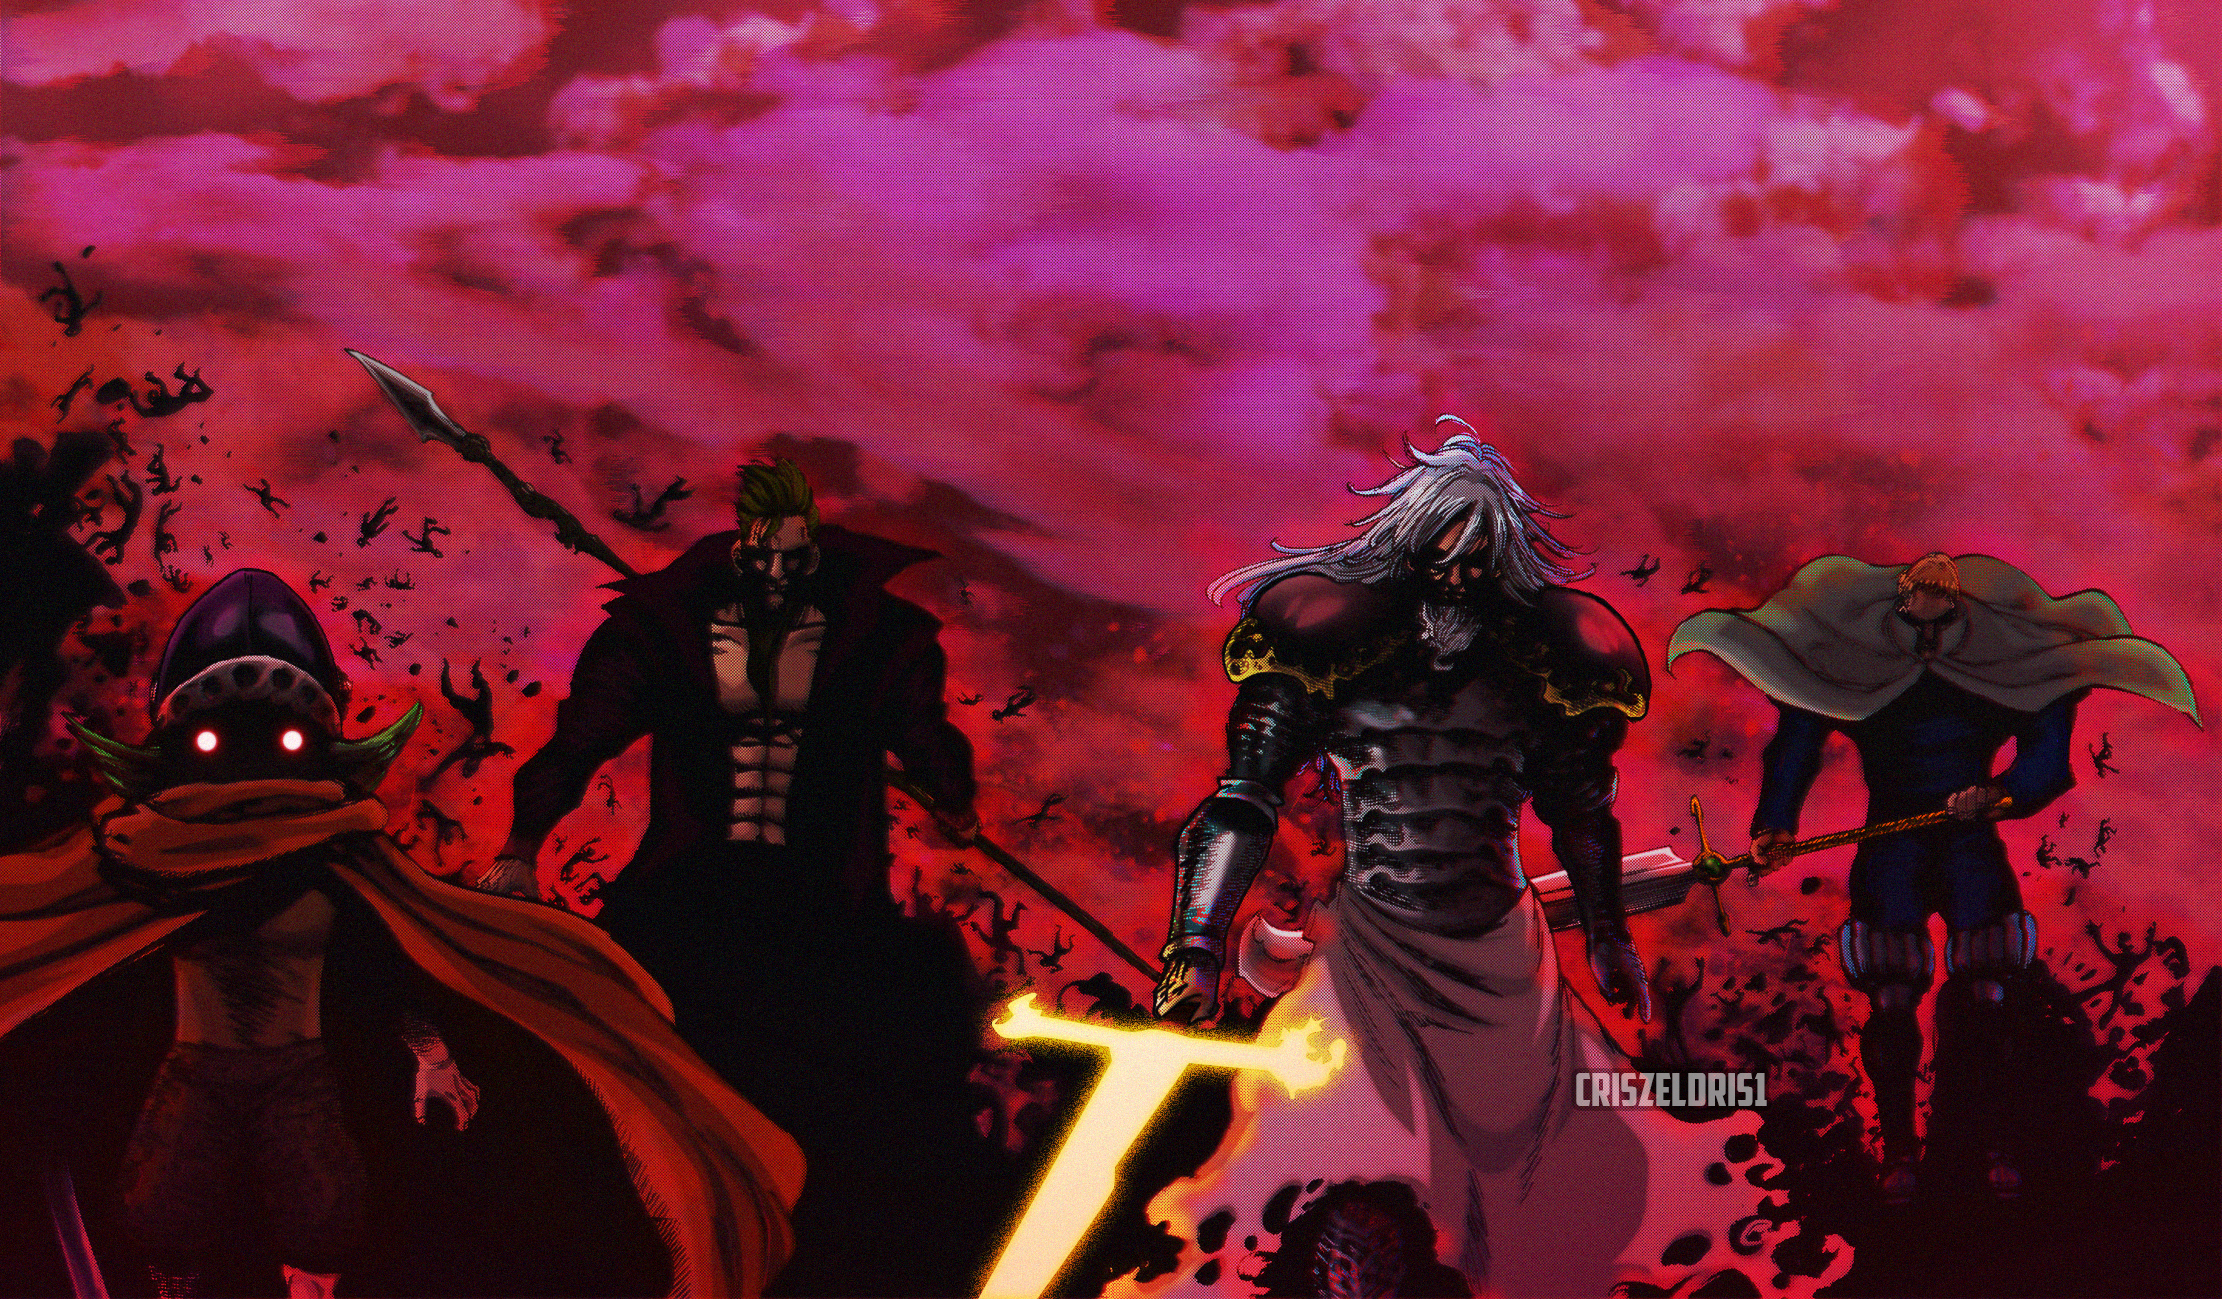 Os 4 - Four Knights of the Apocalypse - NNT Brasil